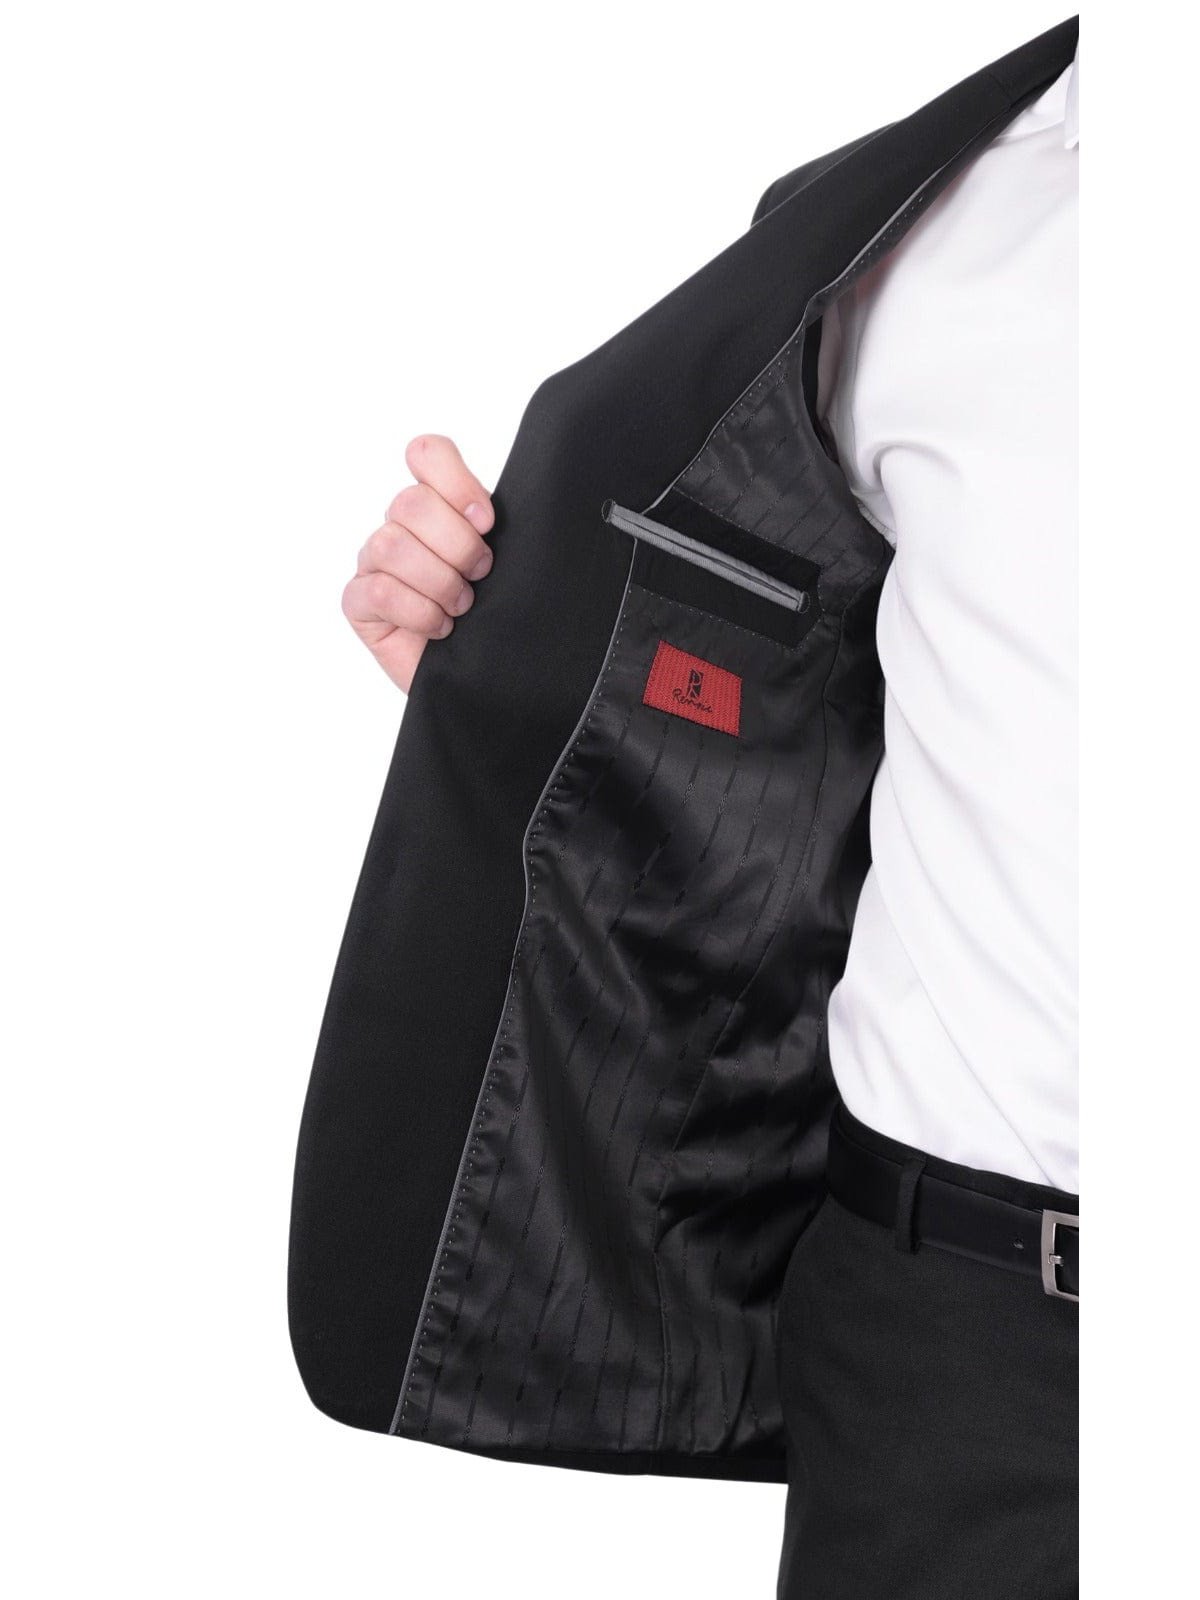 Raphael Bestselling Items Raphael Slim Fit Solid Black Two Button Suit